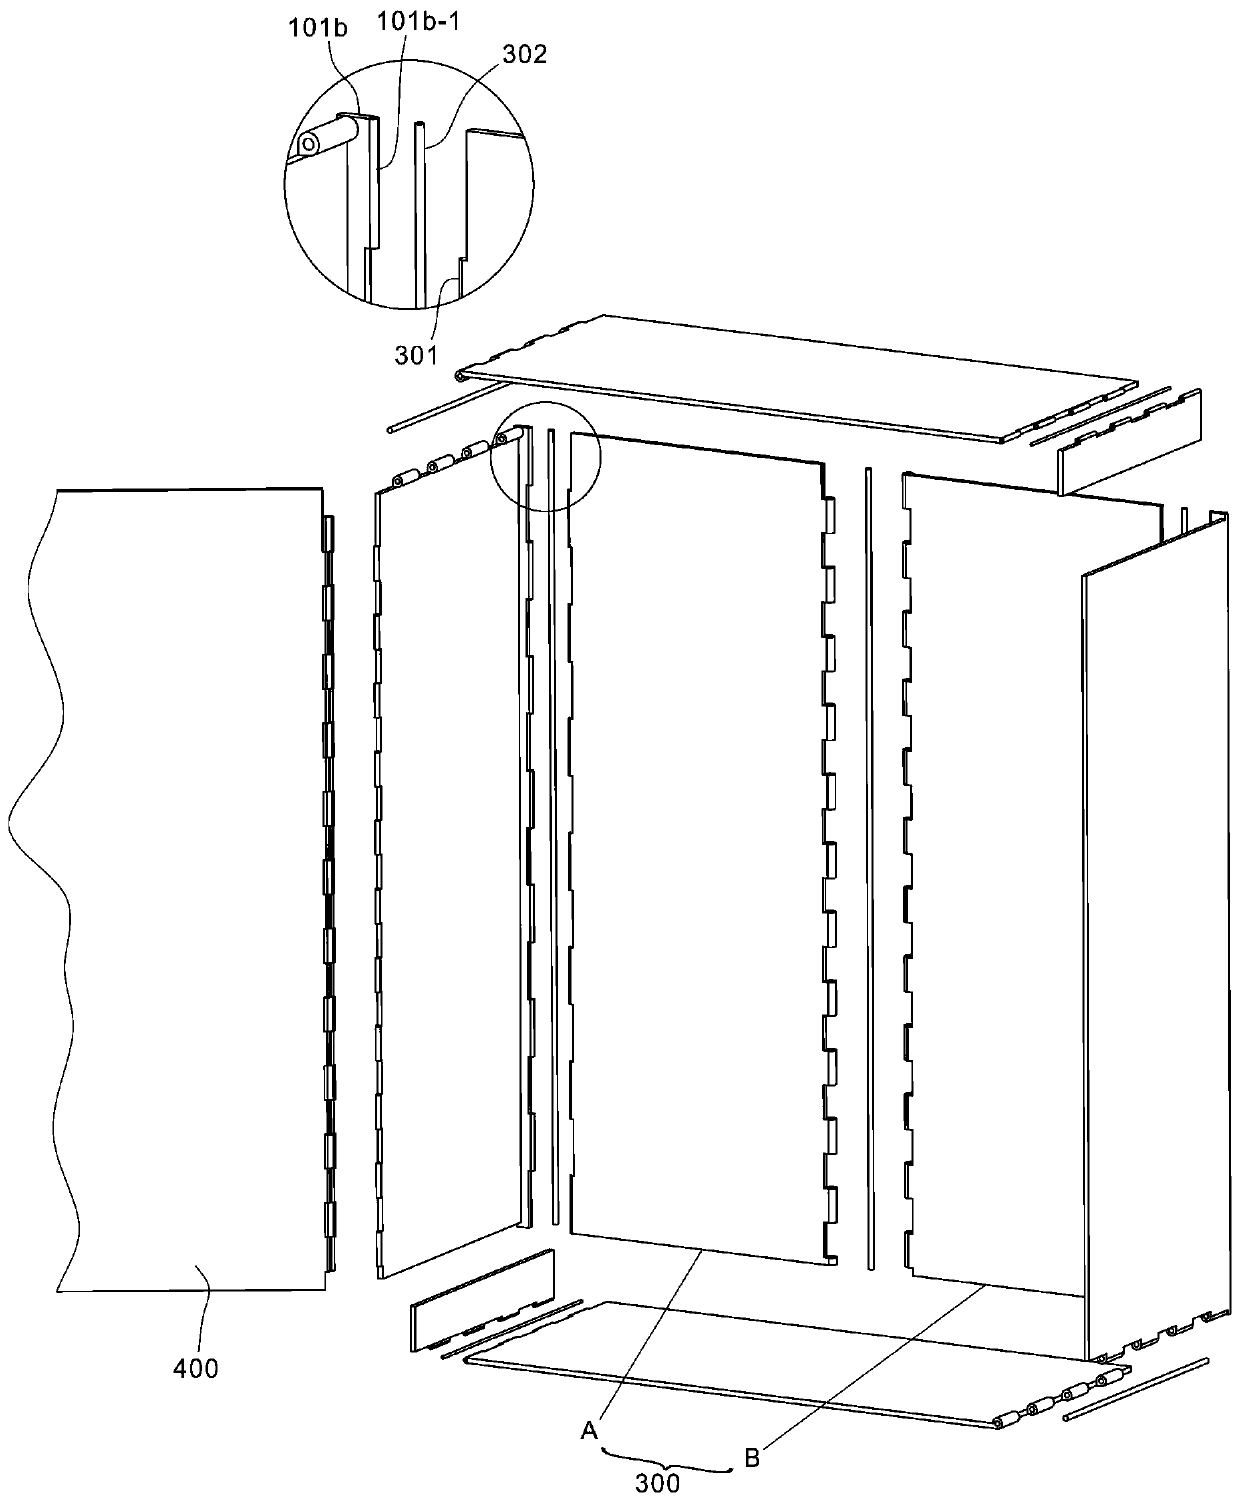 Foldable distribution box